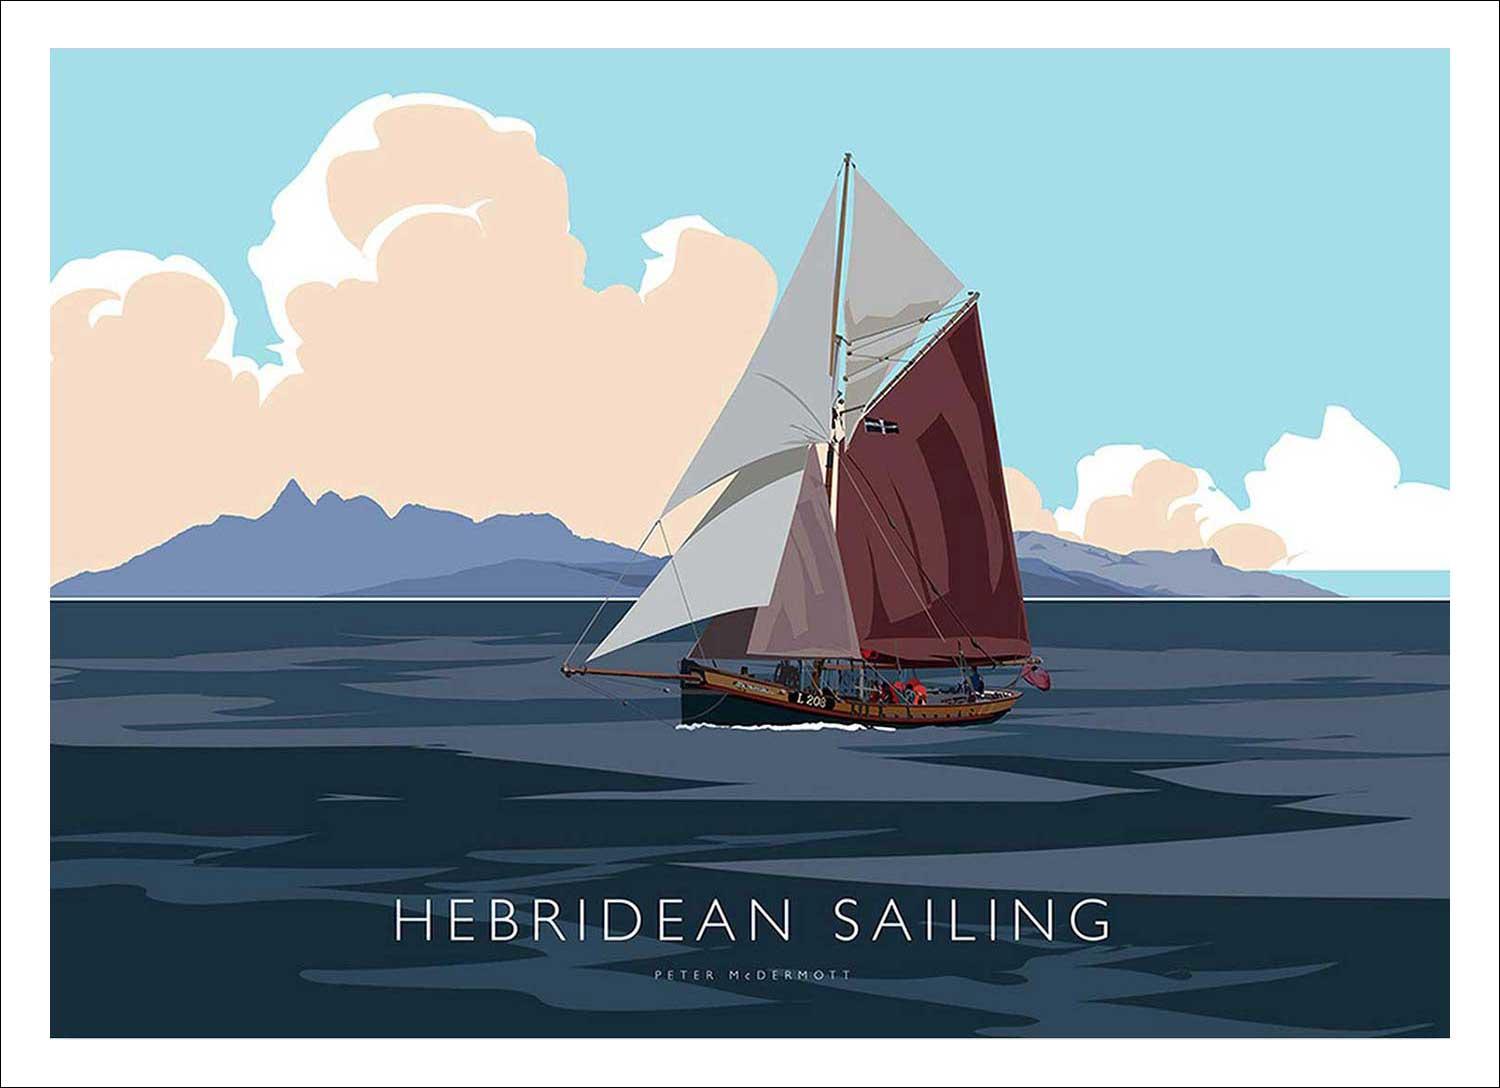 Hebridean Sailing Art Print from an original illustration by artist Peter McDermott